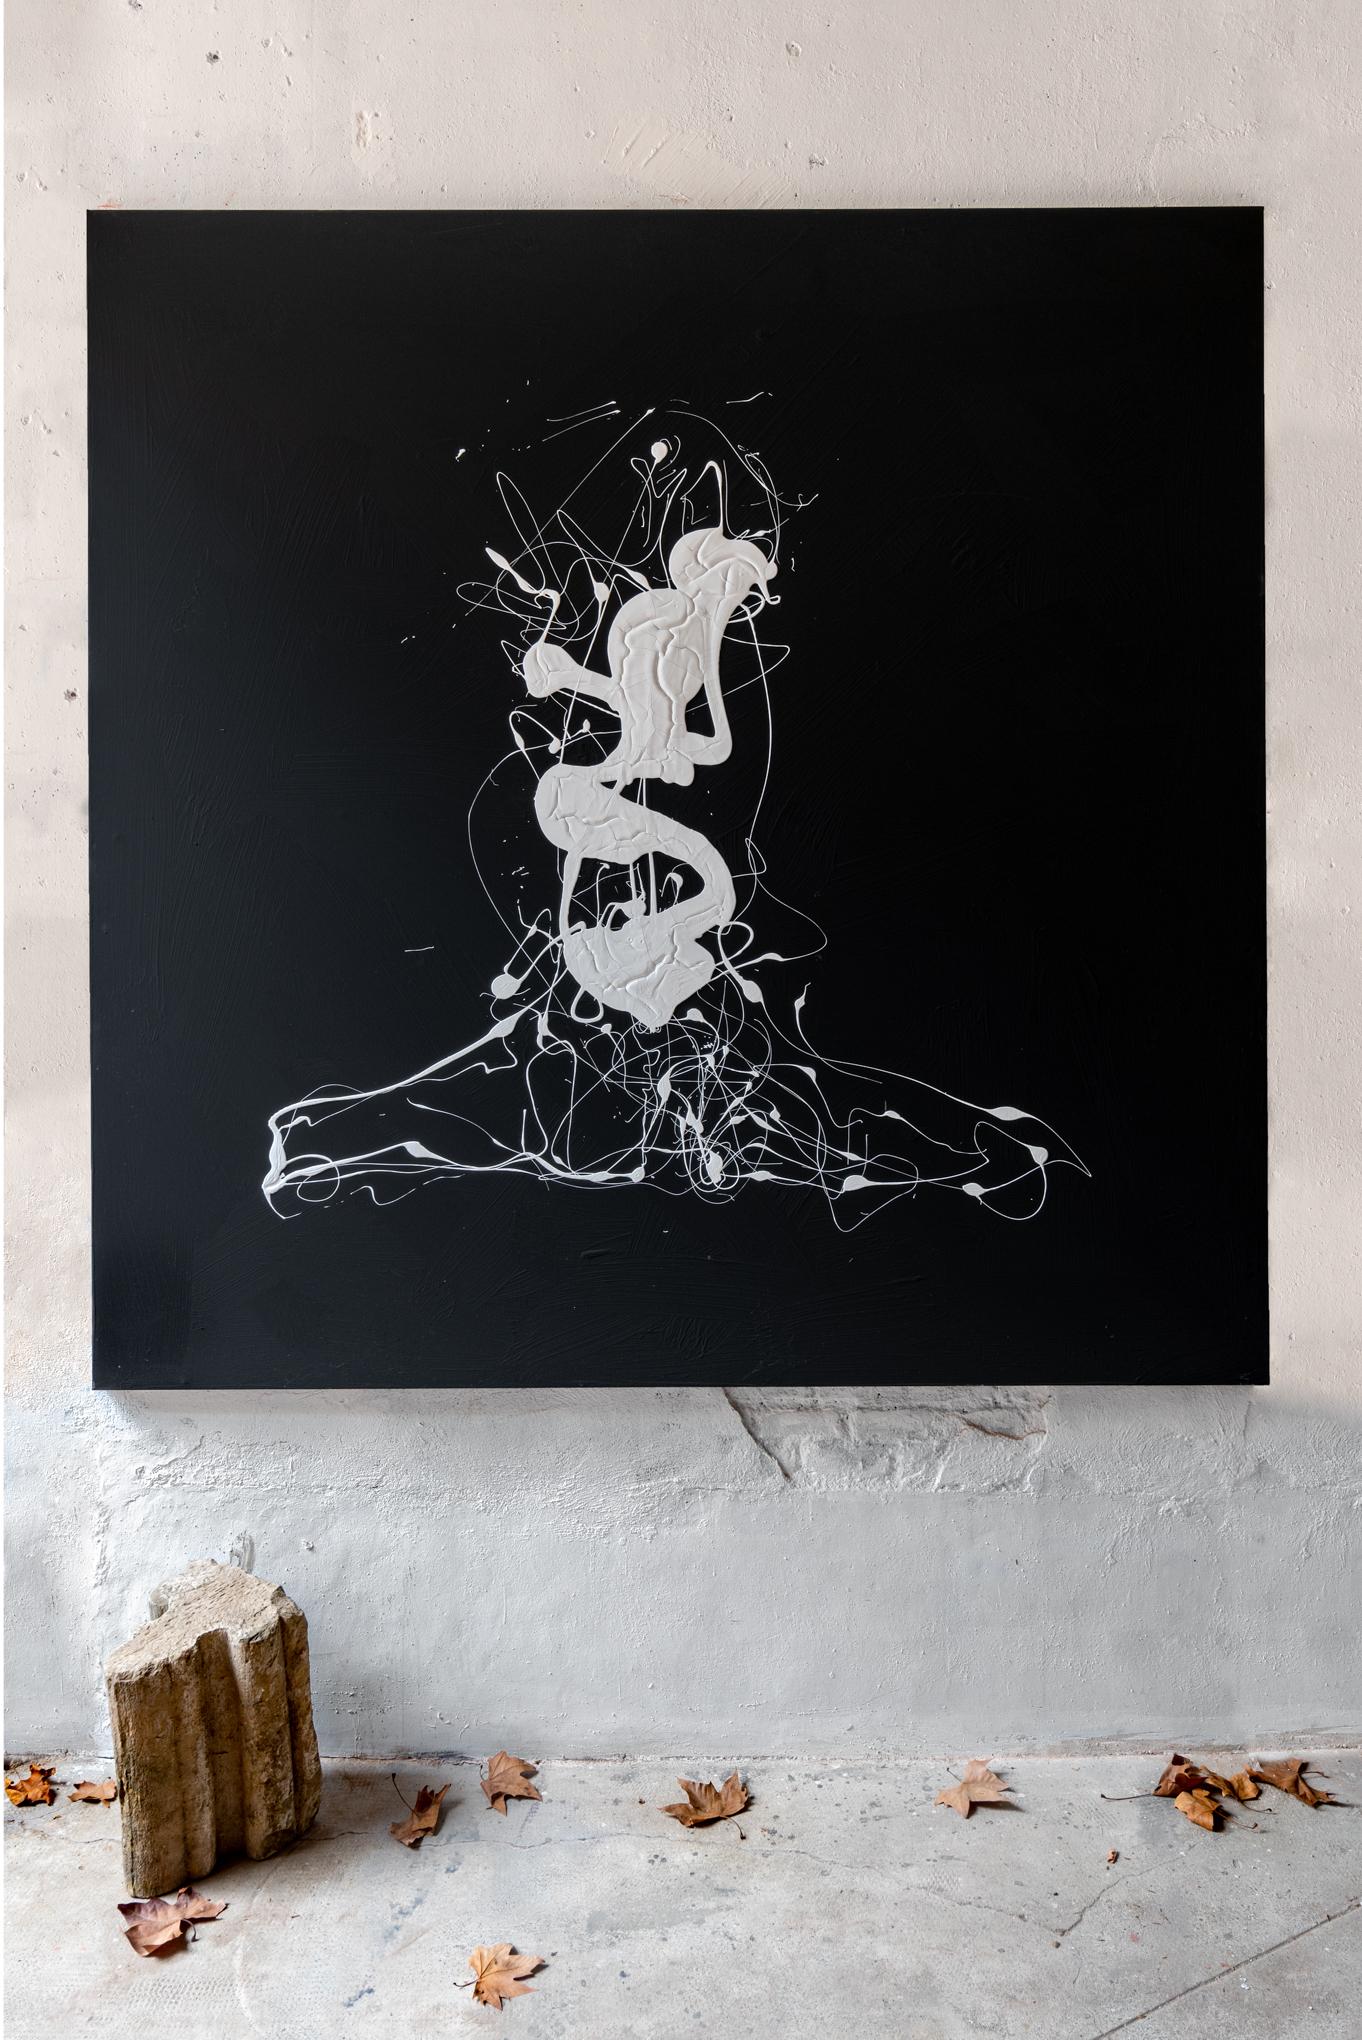 ABSTRACT Painting Black and White Texture Spanish Artist Iñaki Moreno 2022 6